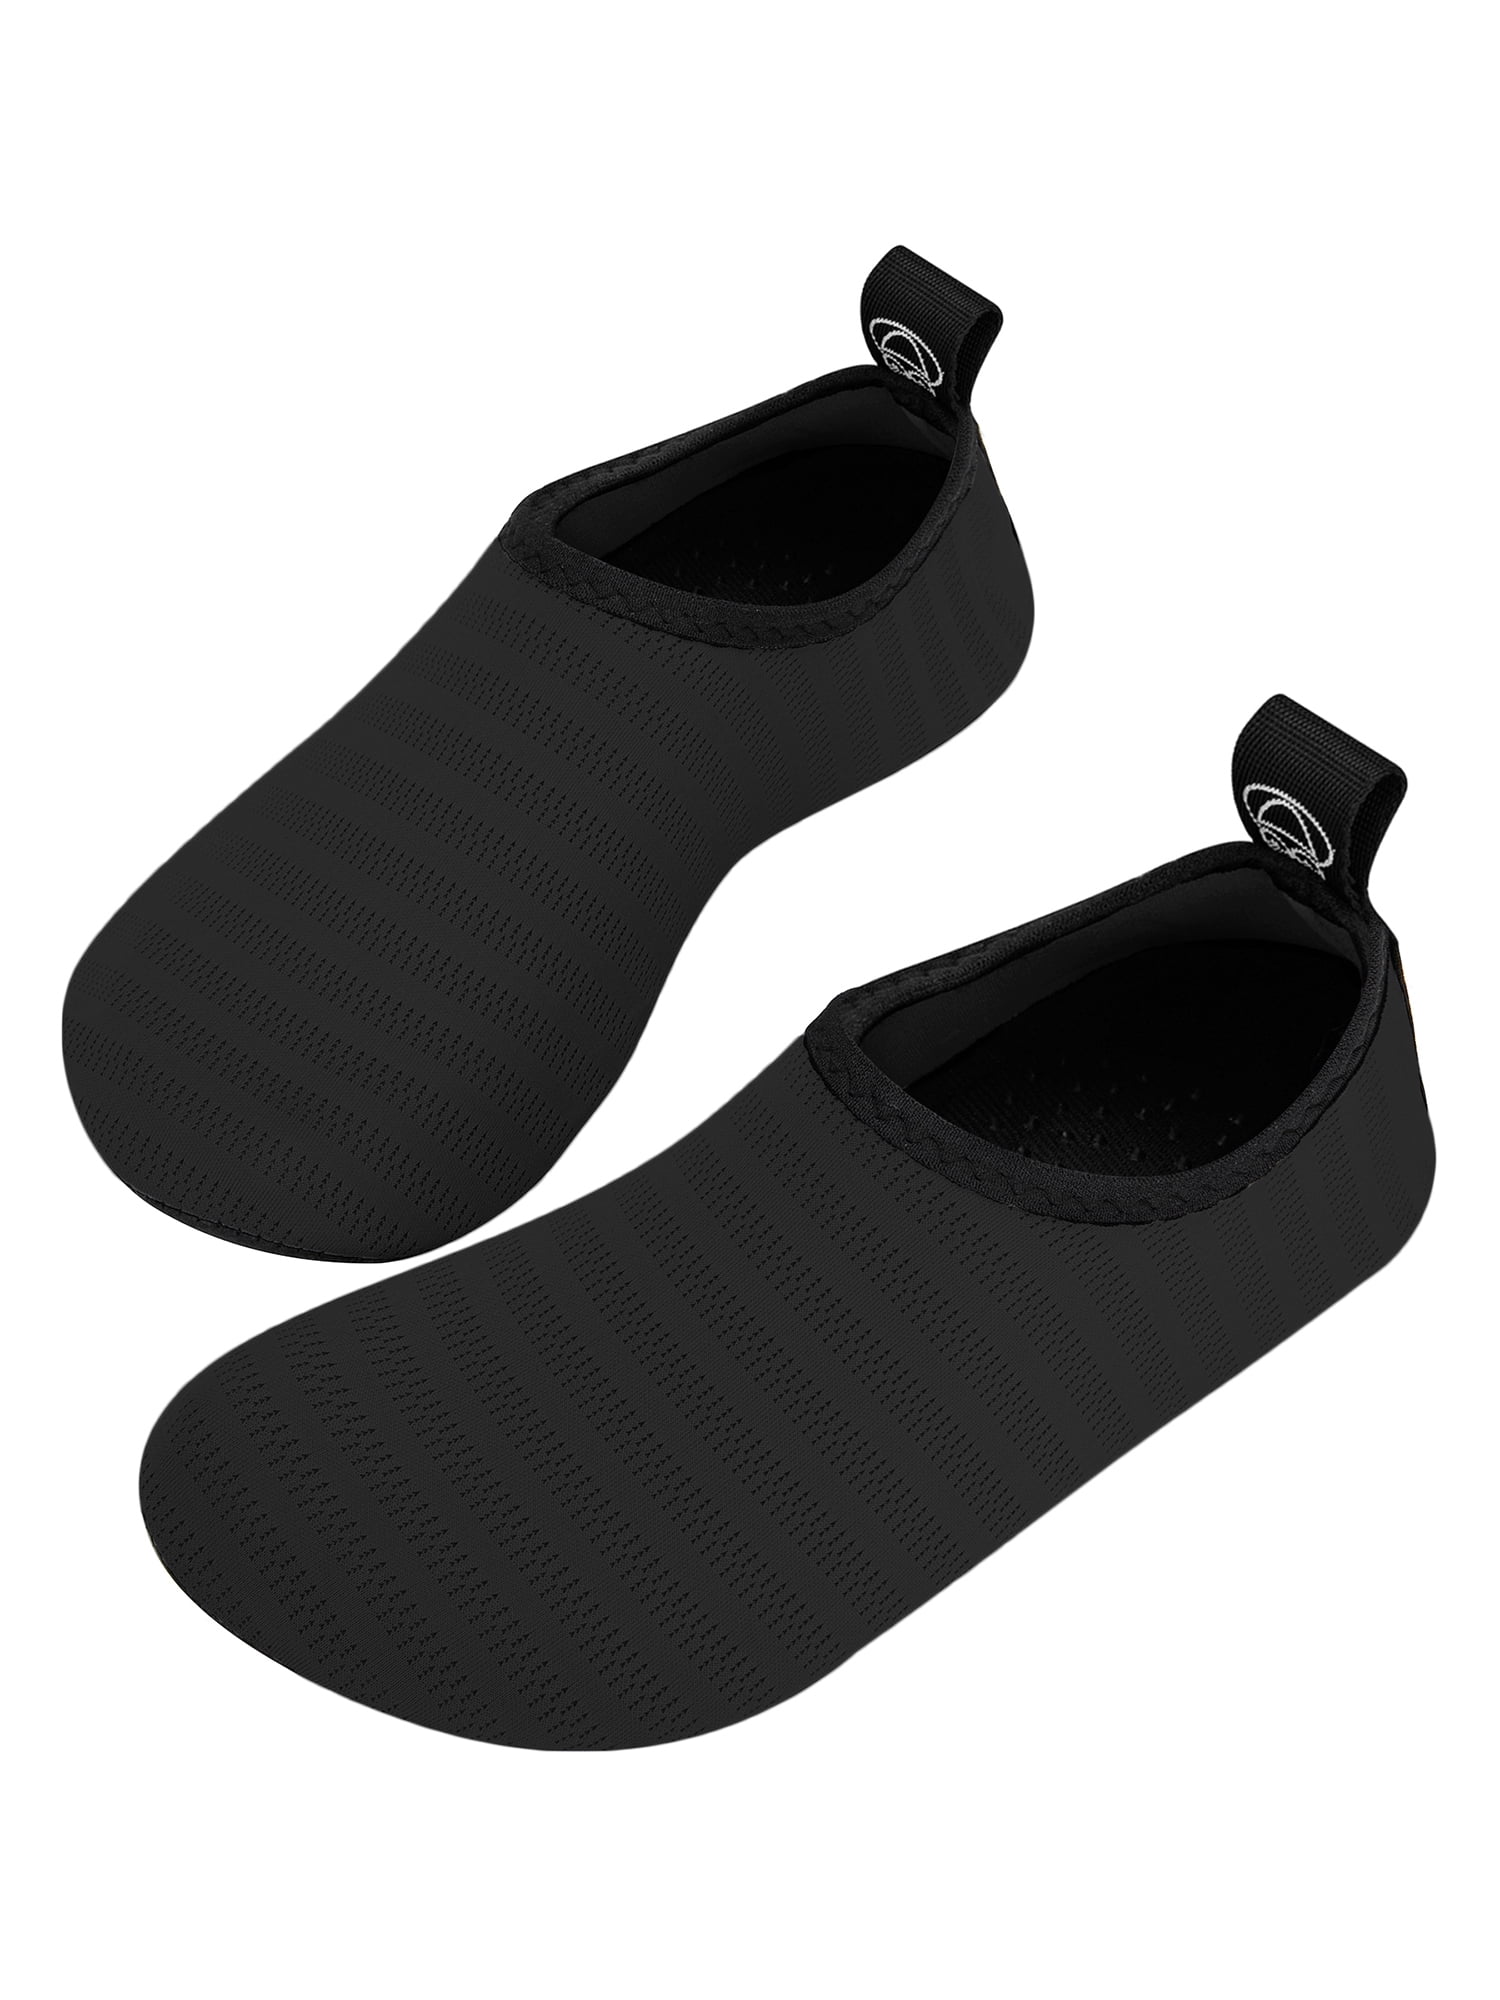 Mens Water Aqua Shoes Quick Dry Yoga Swim Surf Beach Skin Wetsuit Exercise Socks 